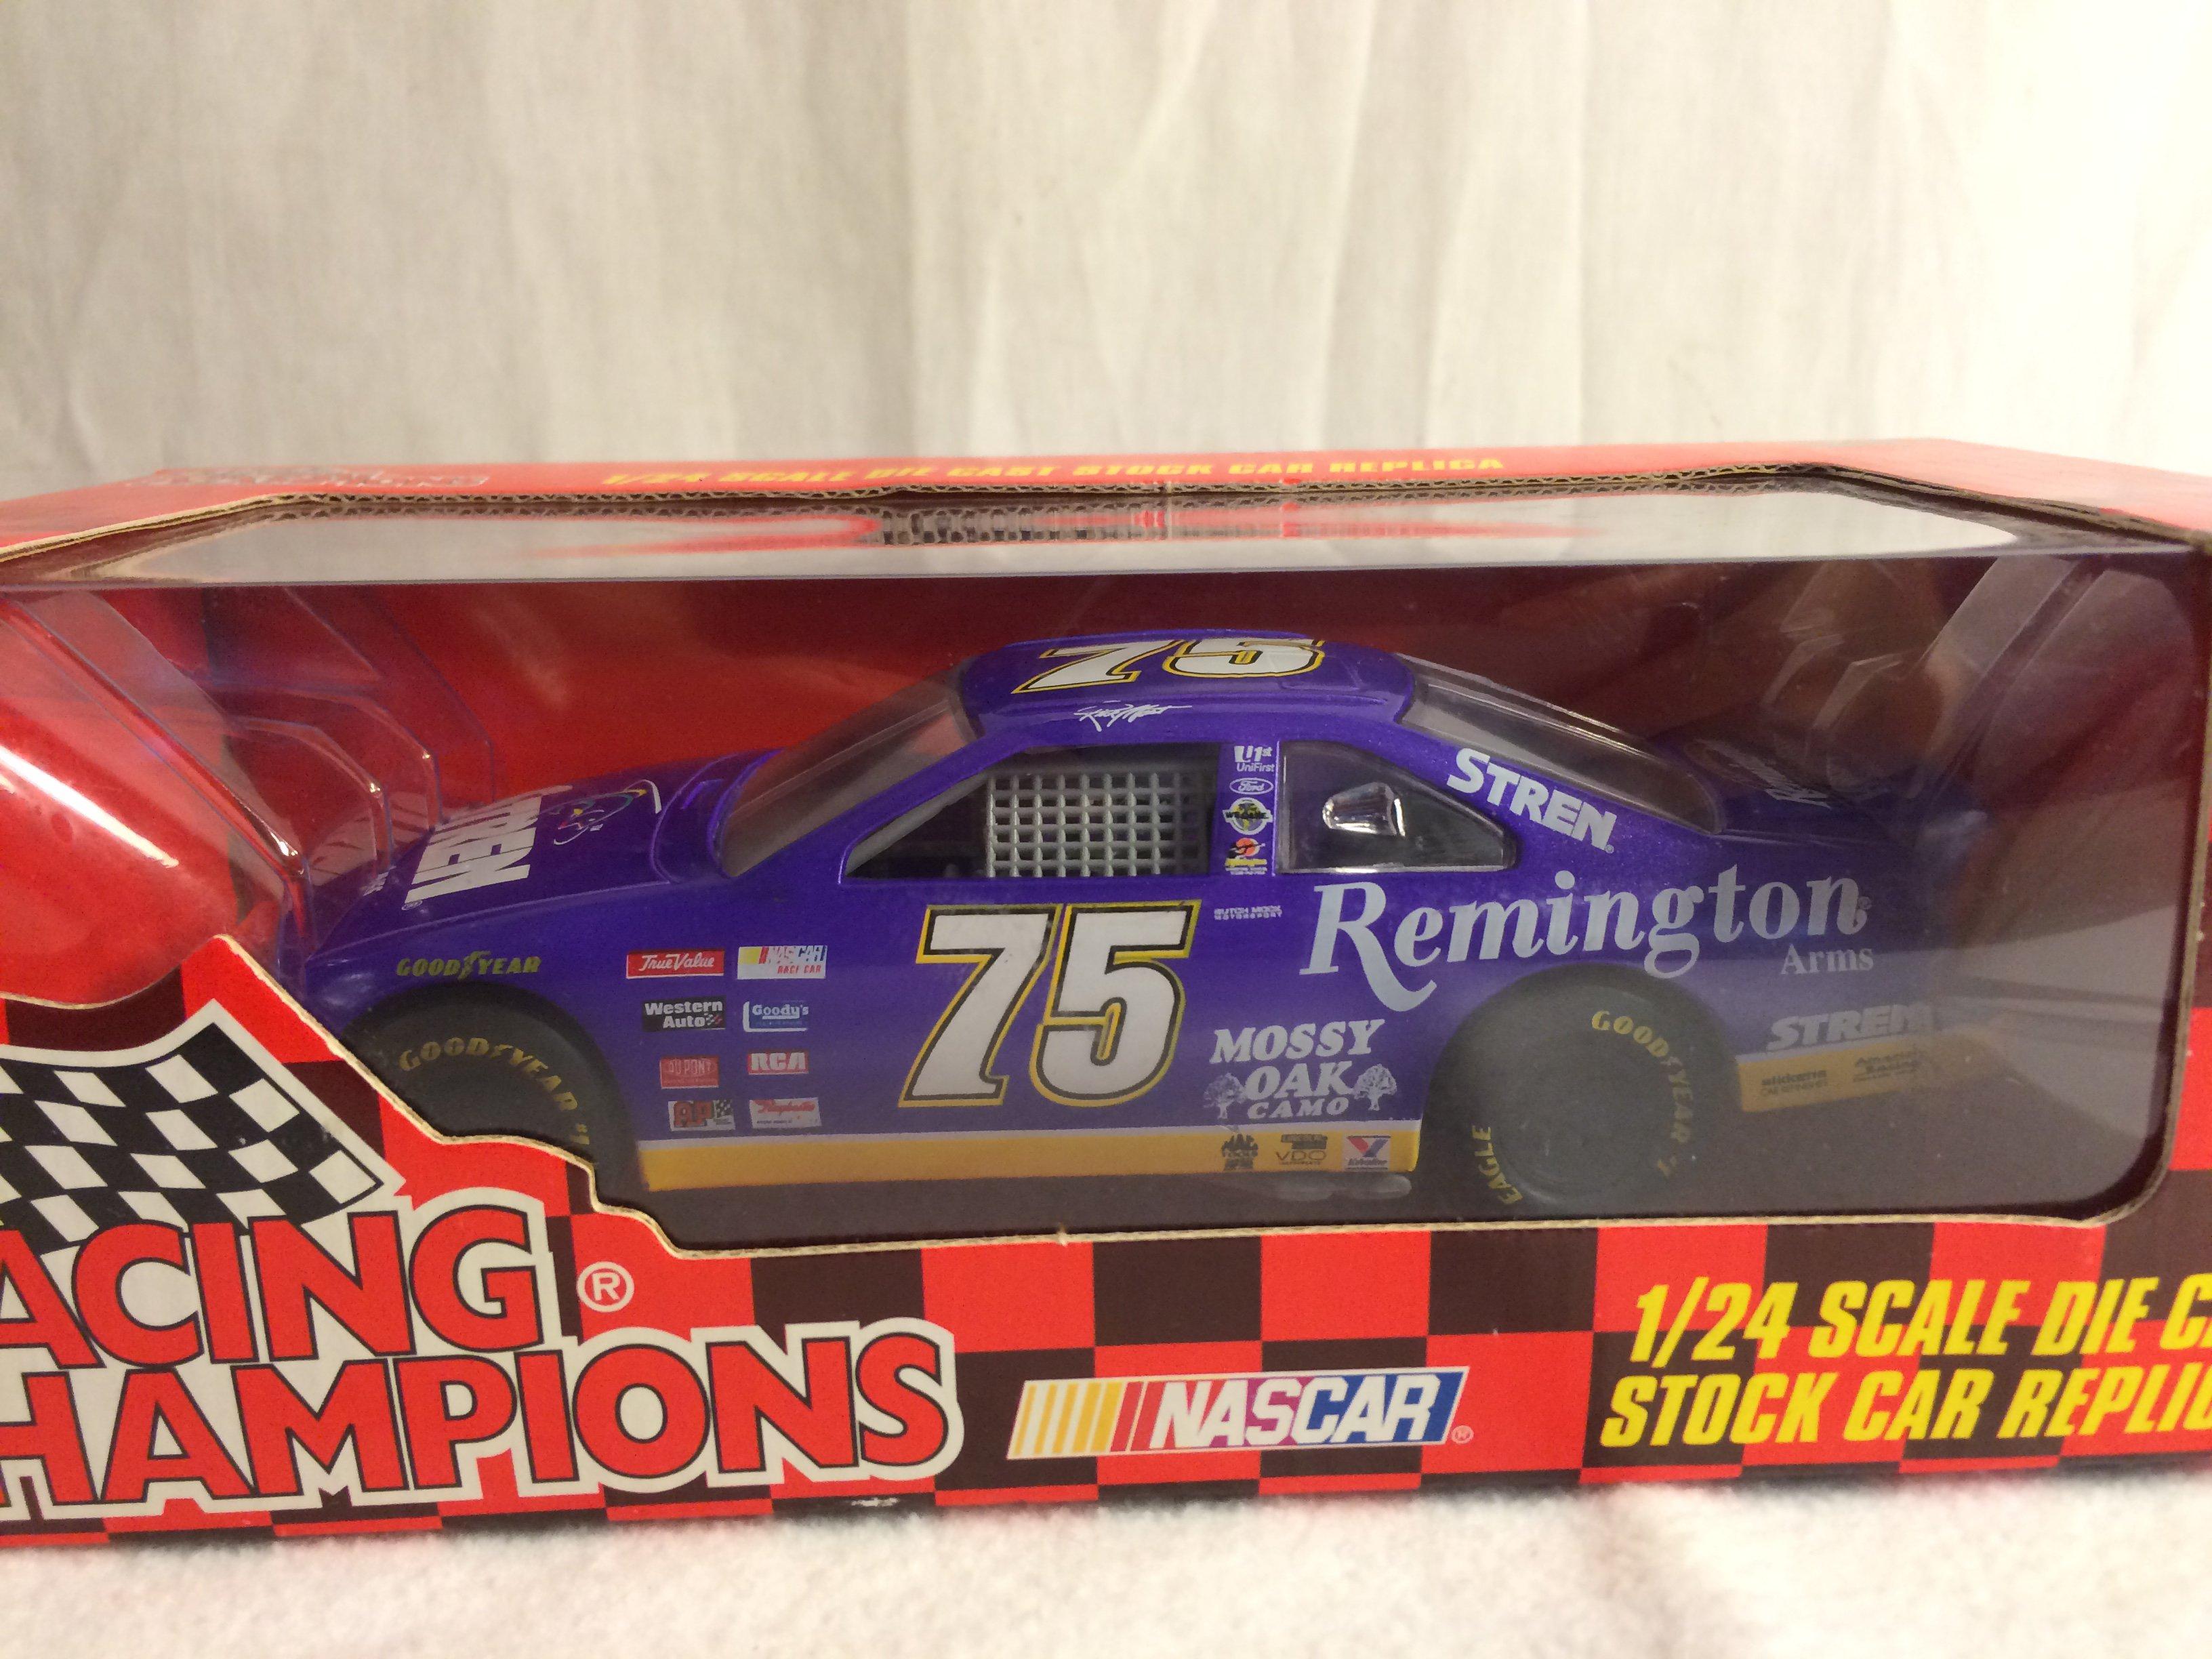 Collector Racing Champions #75 Stren/Remington 1:24 Scale Die Cast Stock Car Replica